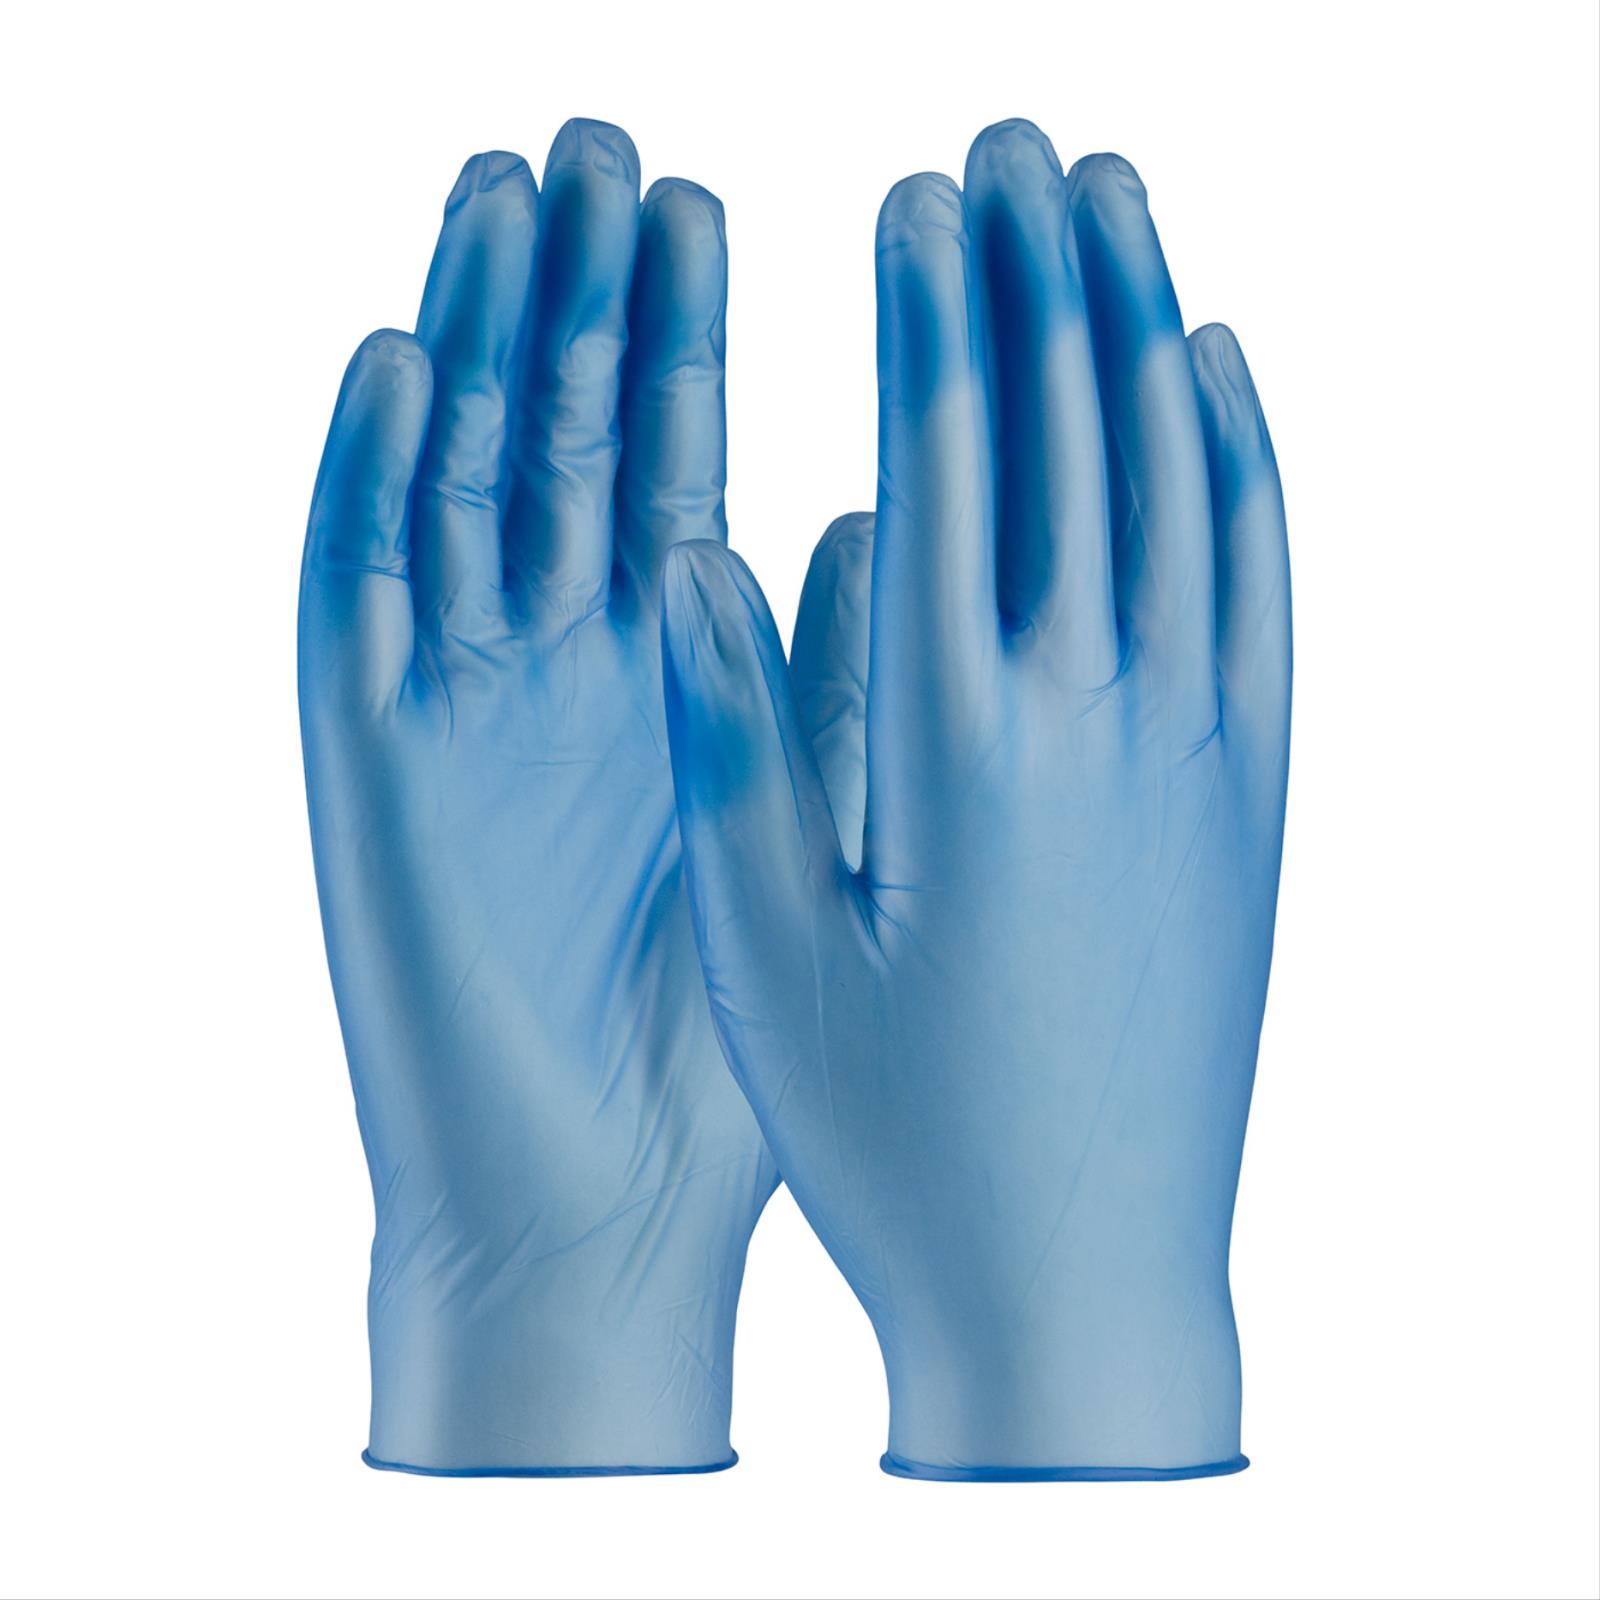 Ambi-dex® Industrial Grade Disposable Vinyl Gloves